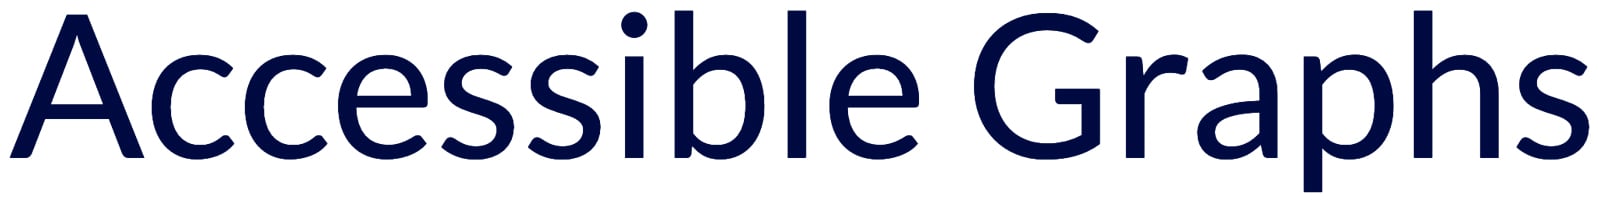 Accessible Graphs Logo